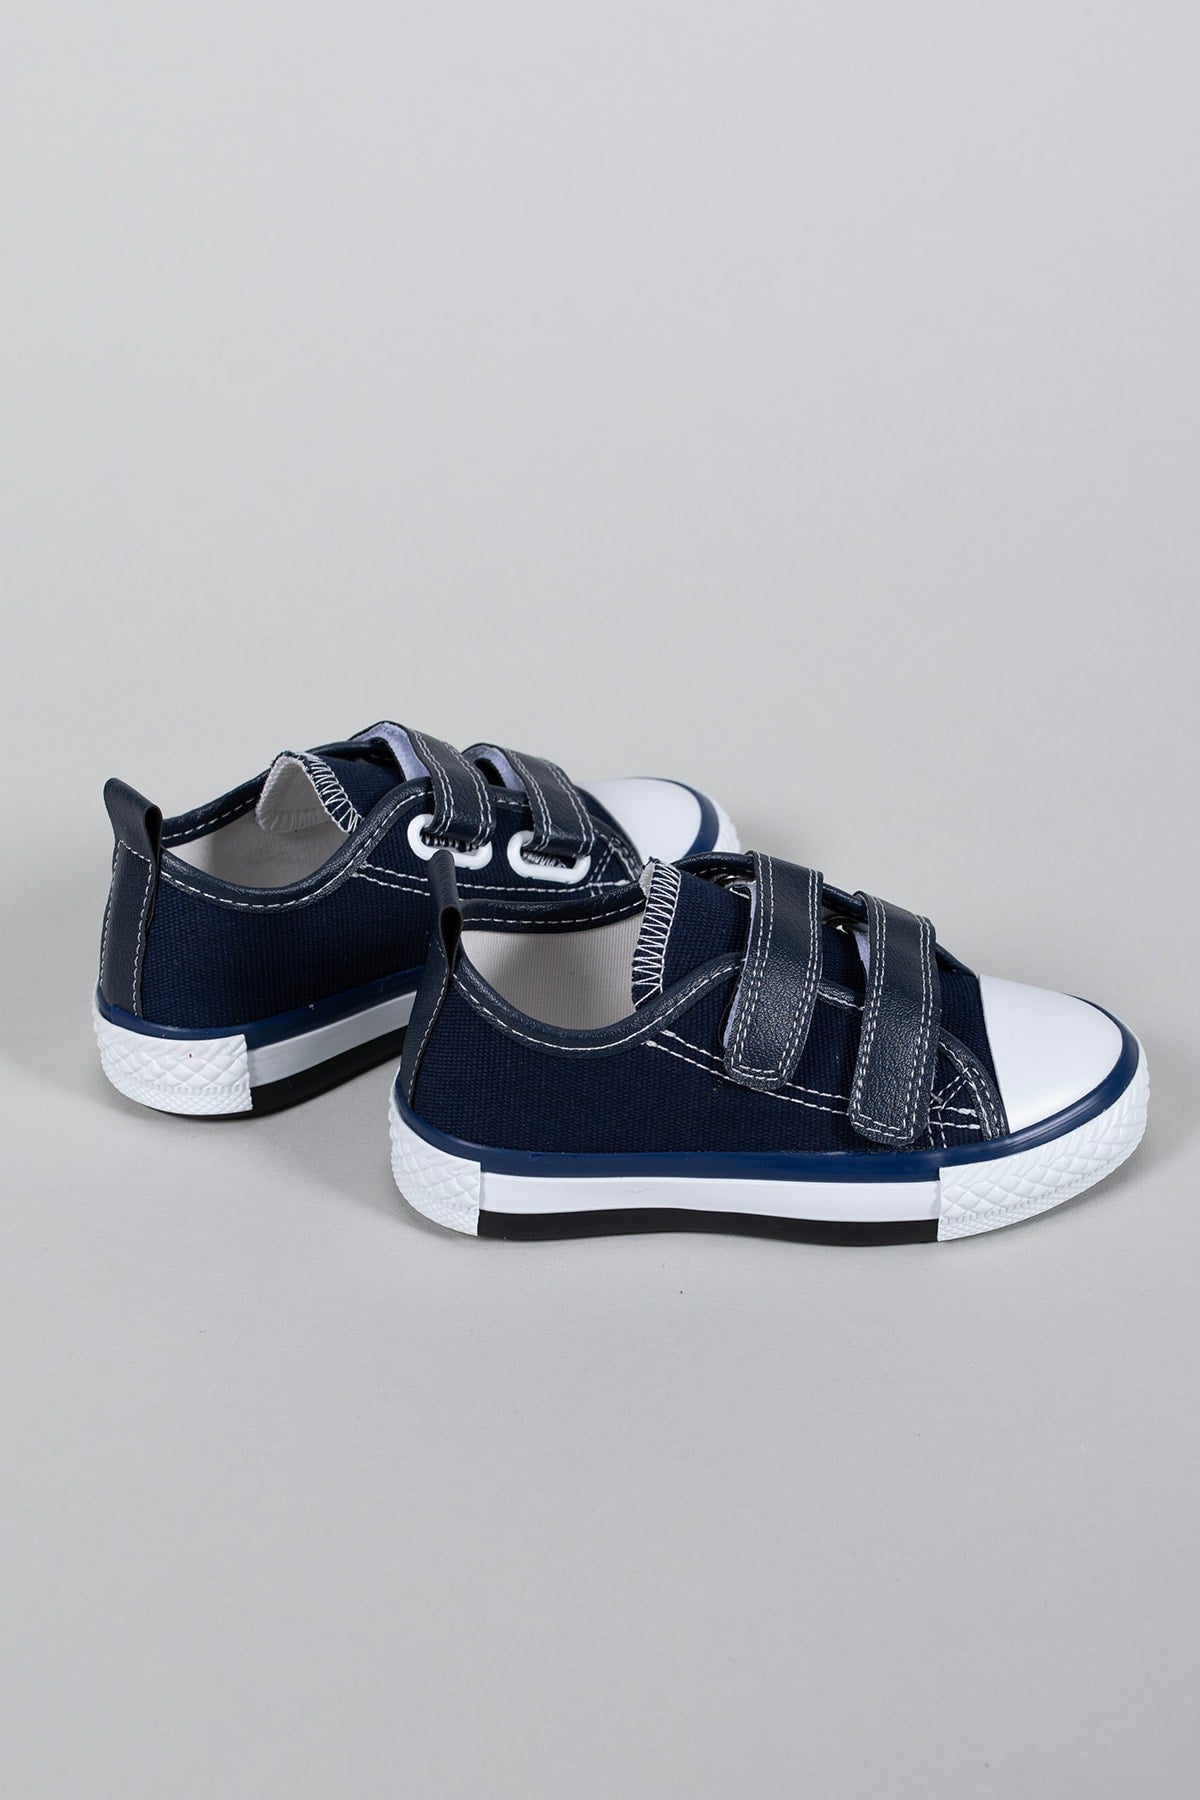 Unisex Kids Sneaker 001215 Navy Blue